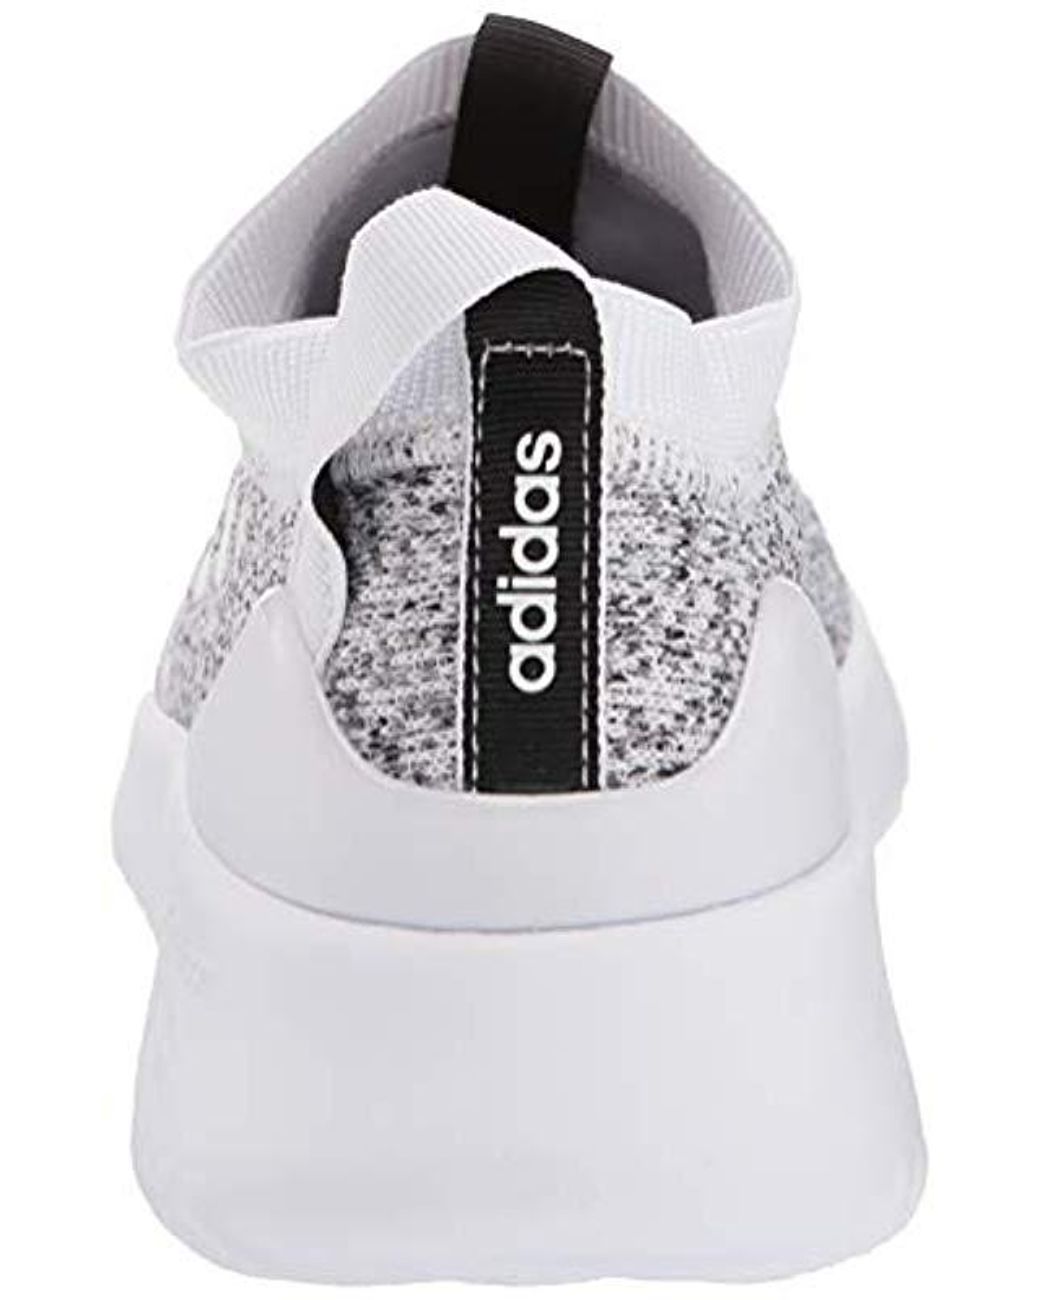 adidas Ultimafusion Running Shoe in White/White/Black (White) | Lyst